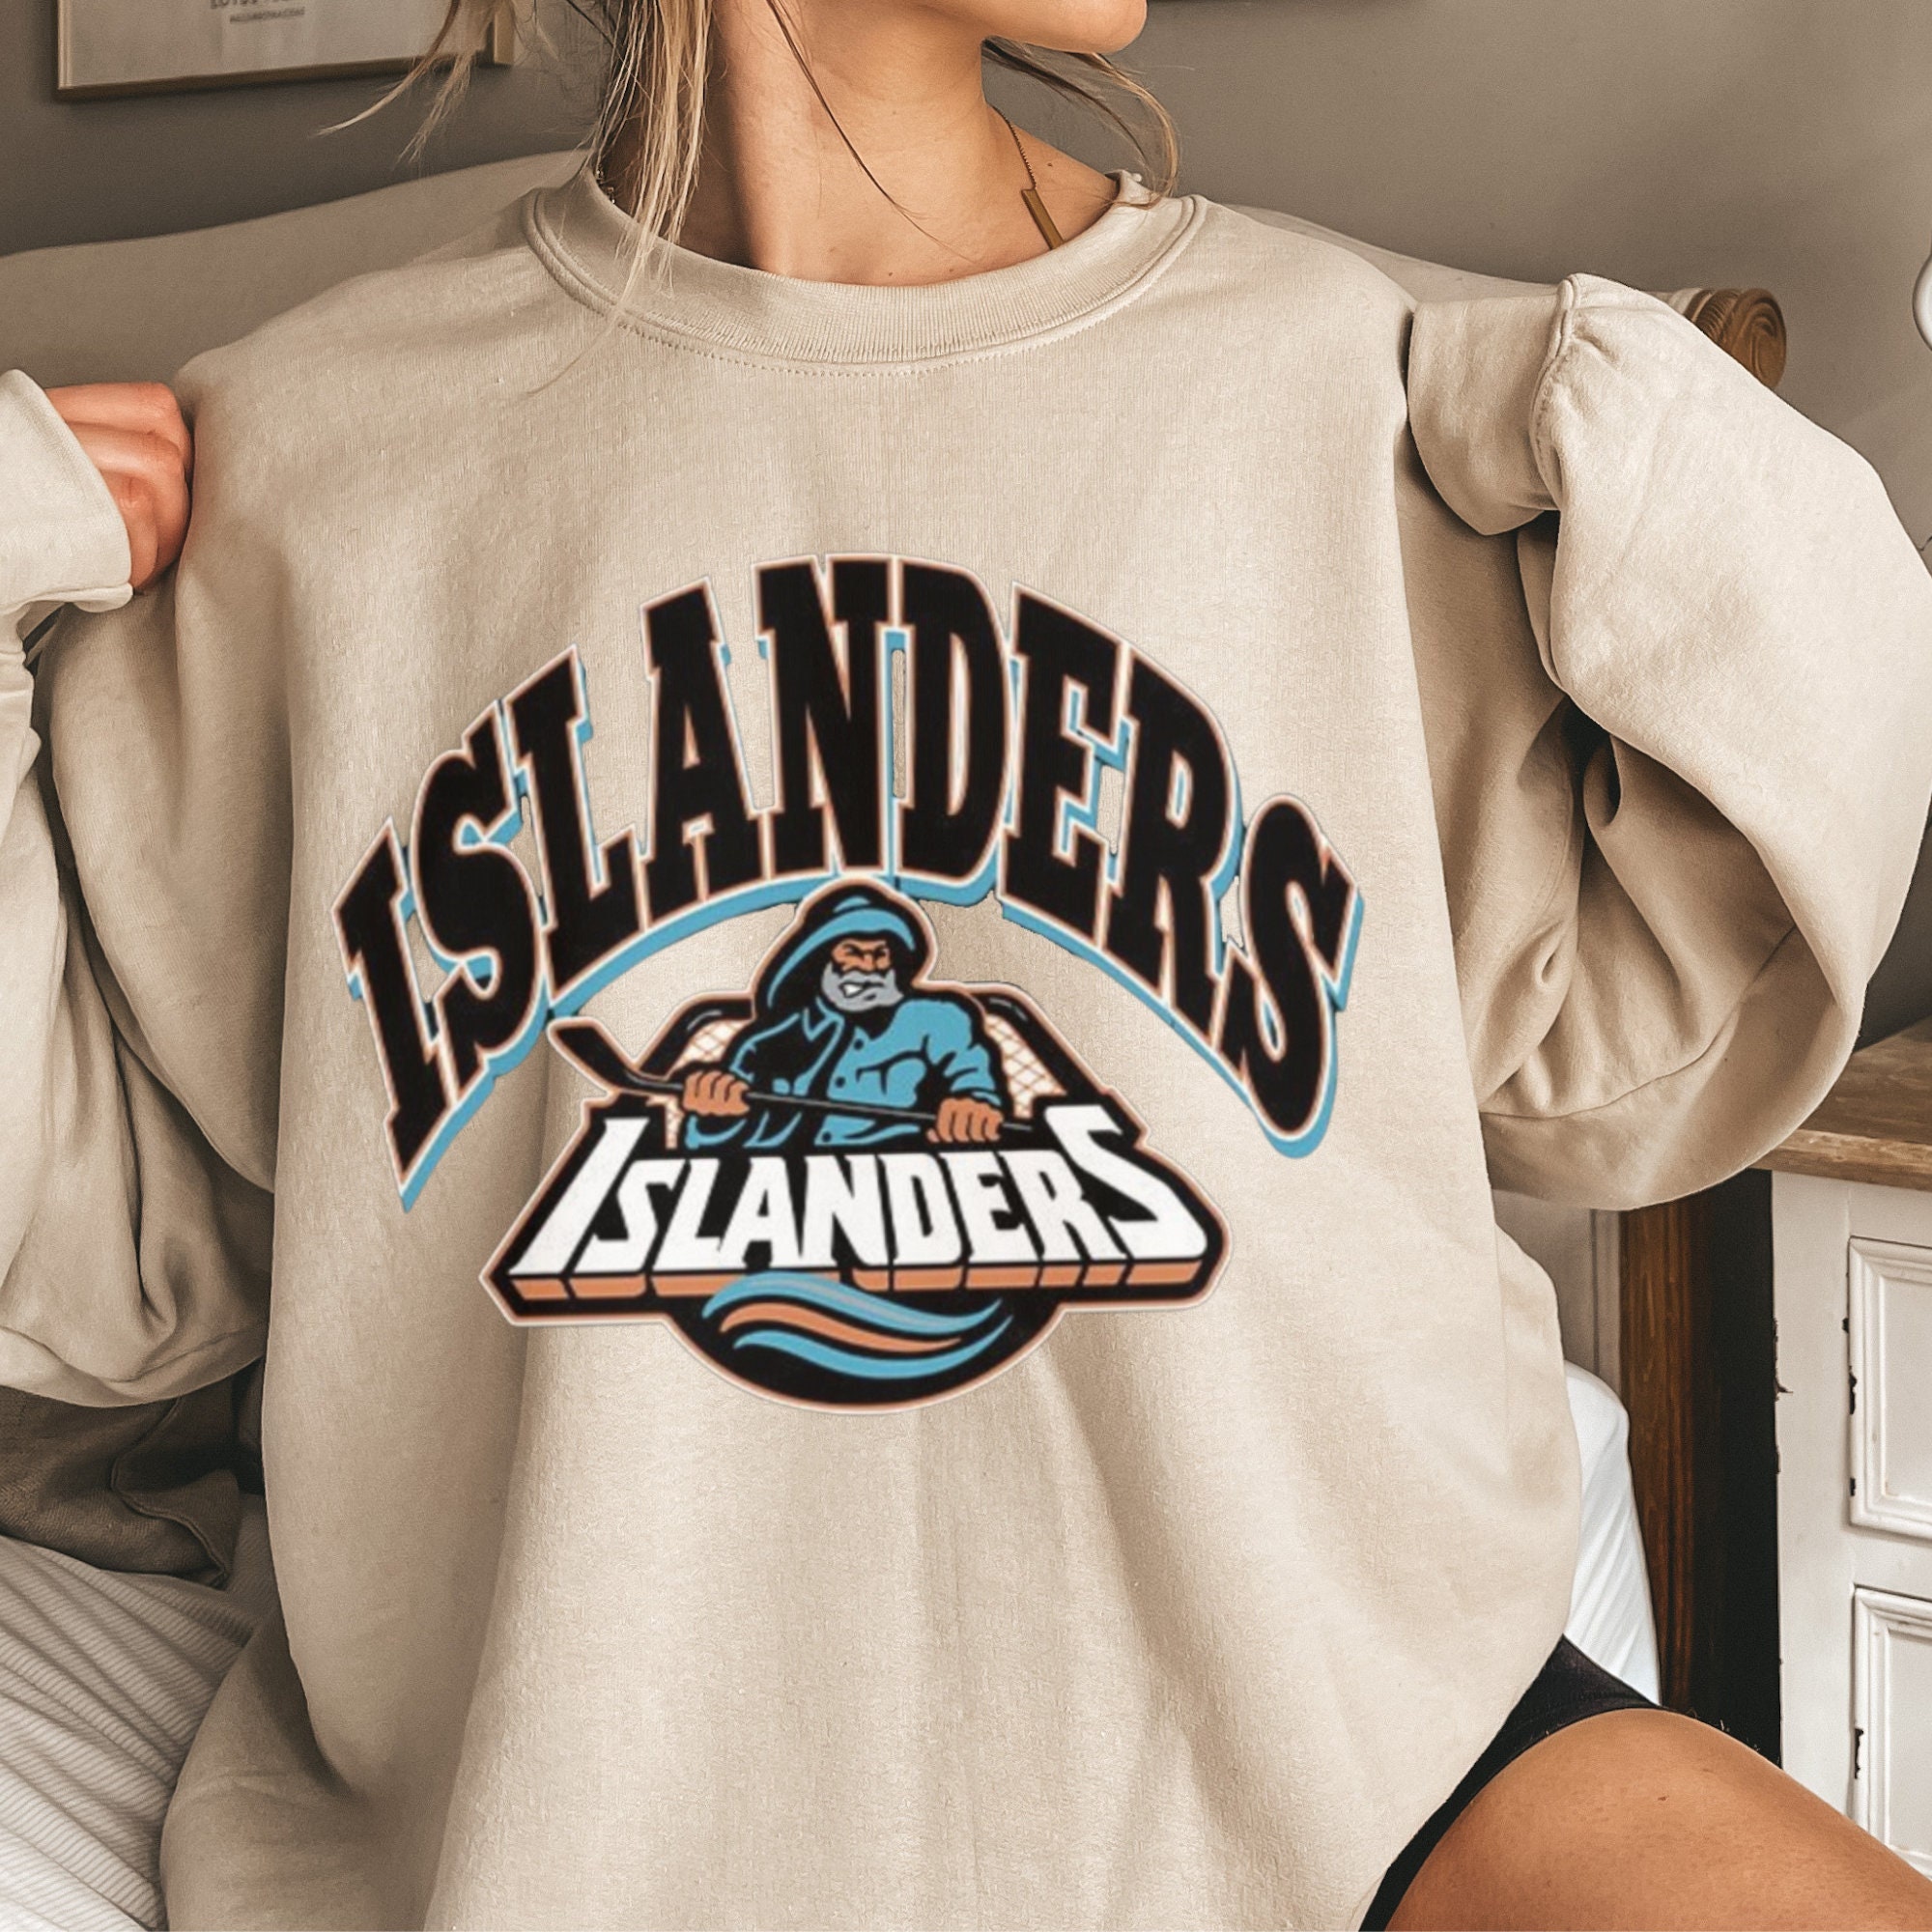 New York Islander Vintage New York Islander Sweatshirt 